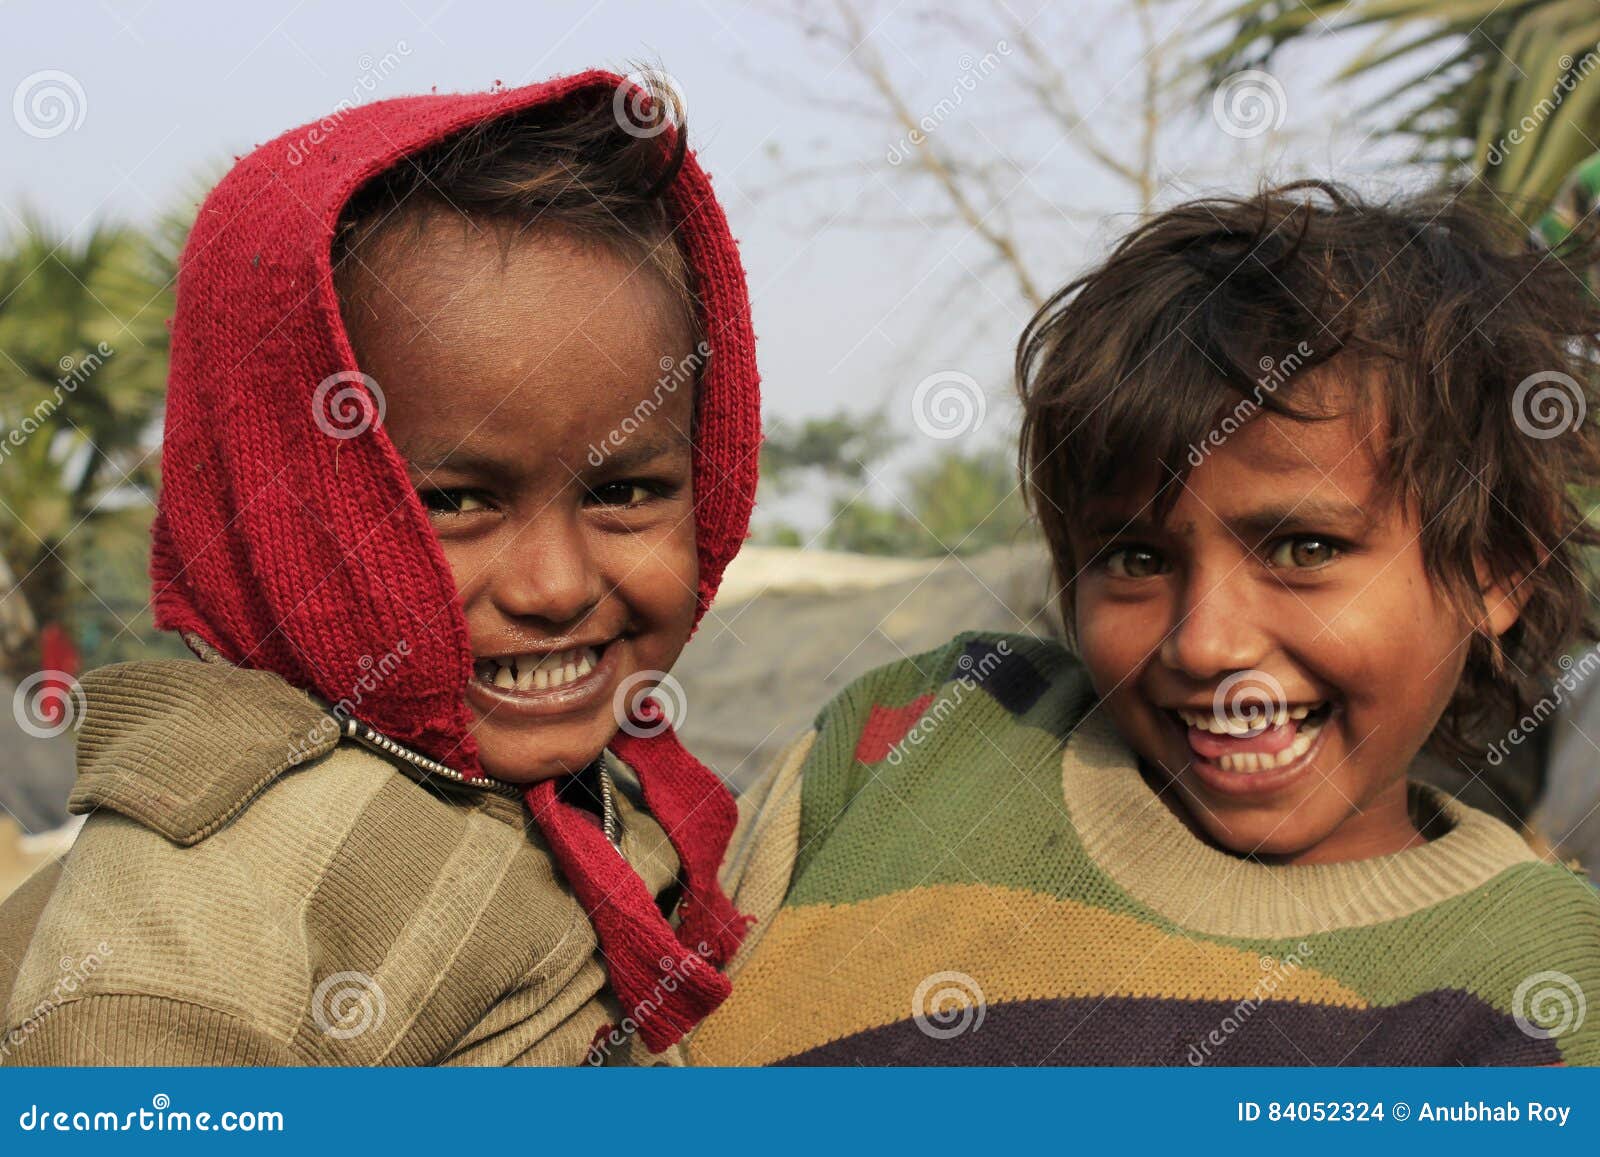 Portrait Of Little Vagabond Kids Homeless Kids Editorial Stock Image Image Of Downcast Children